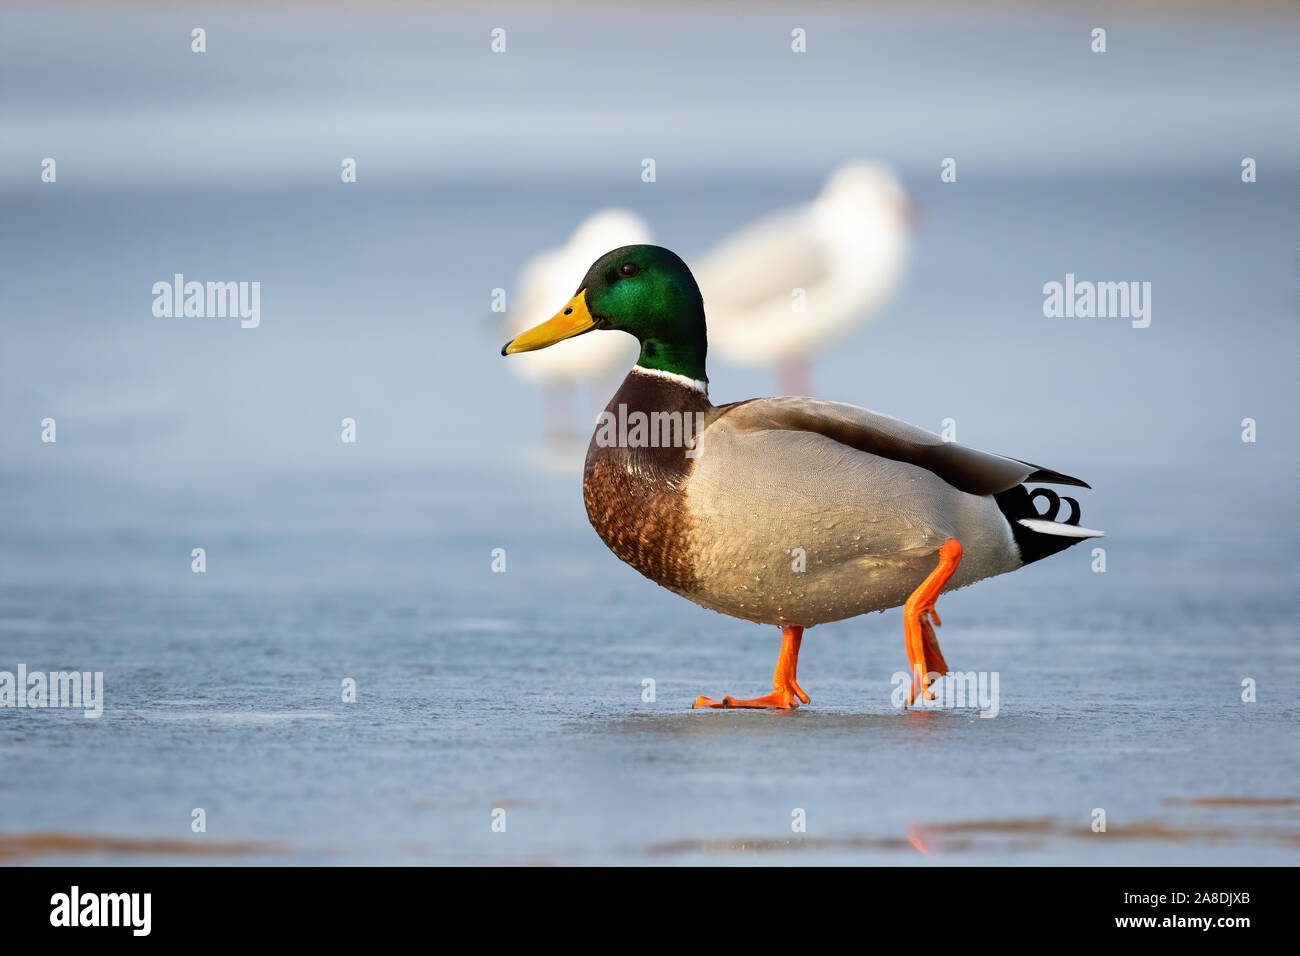 Male mallard duck walking on ice on frozen river in winter at sunrise Stock Photo